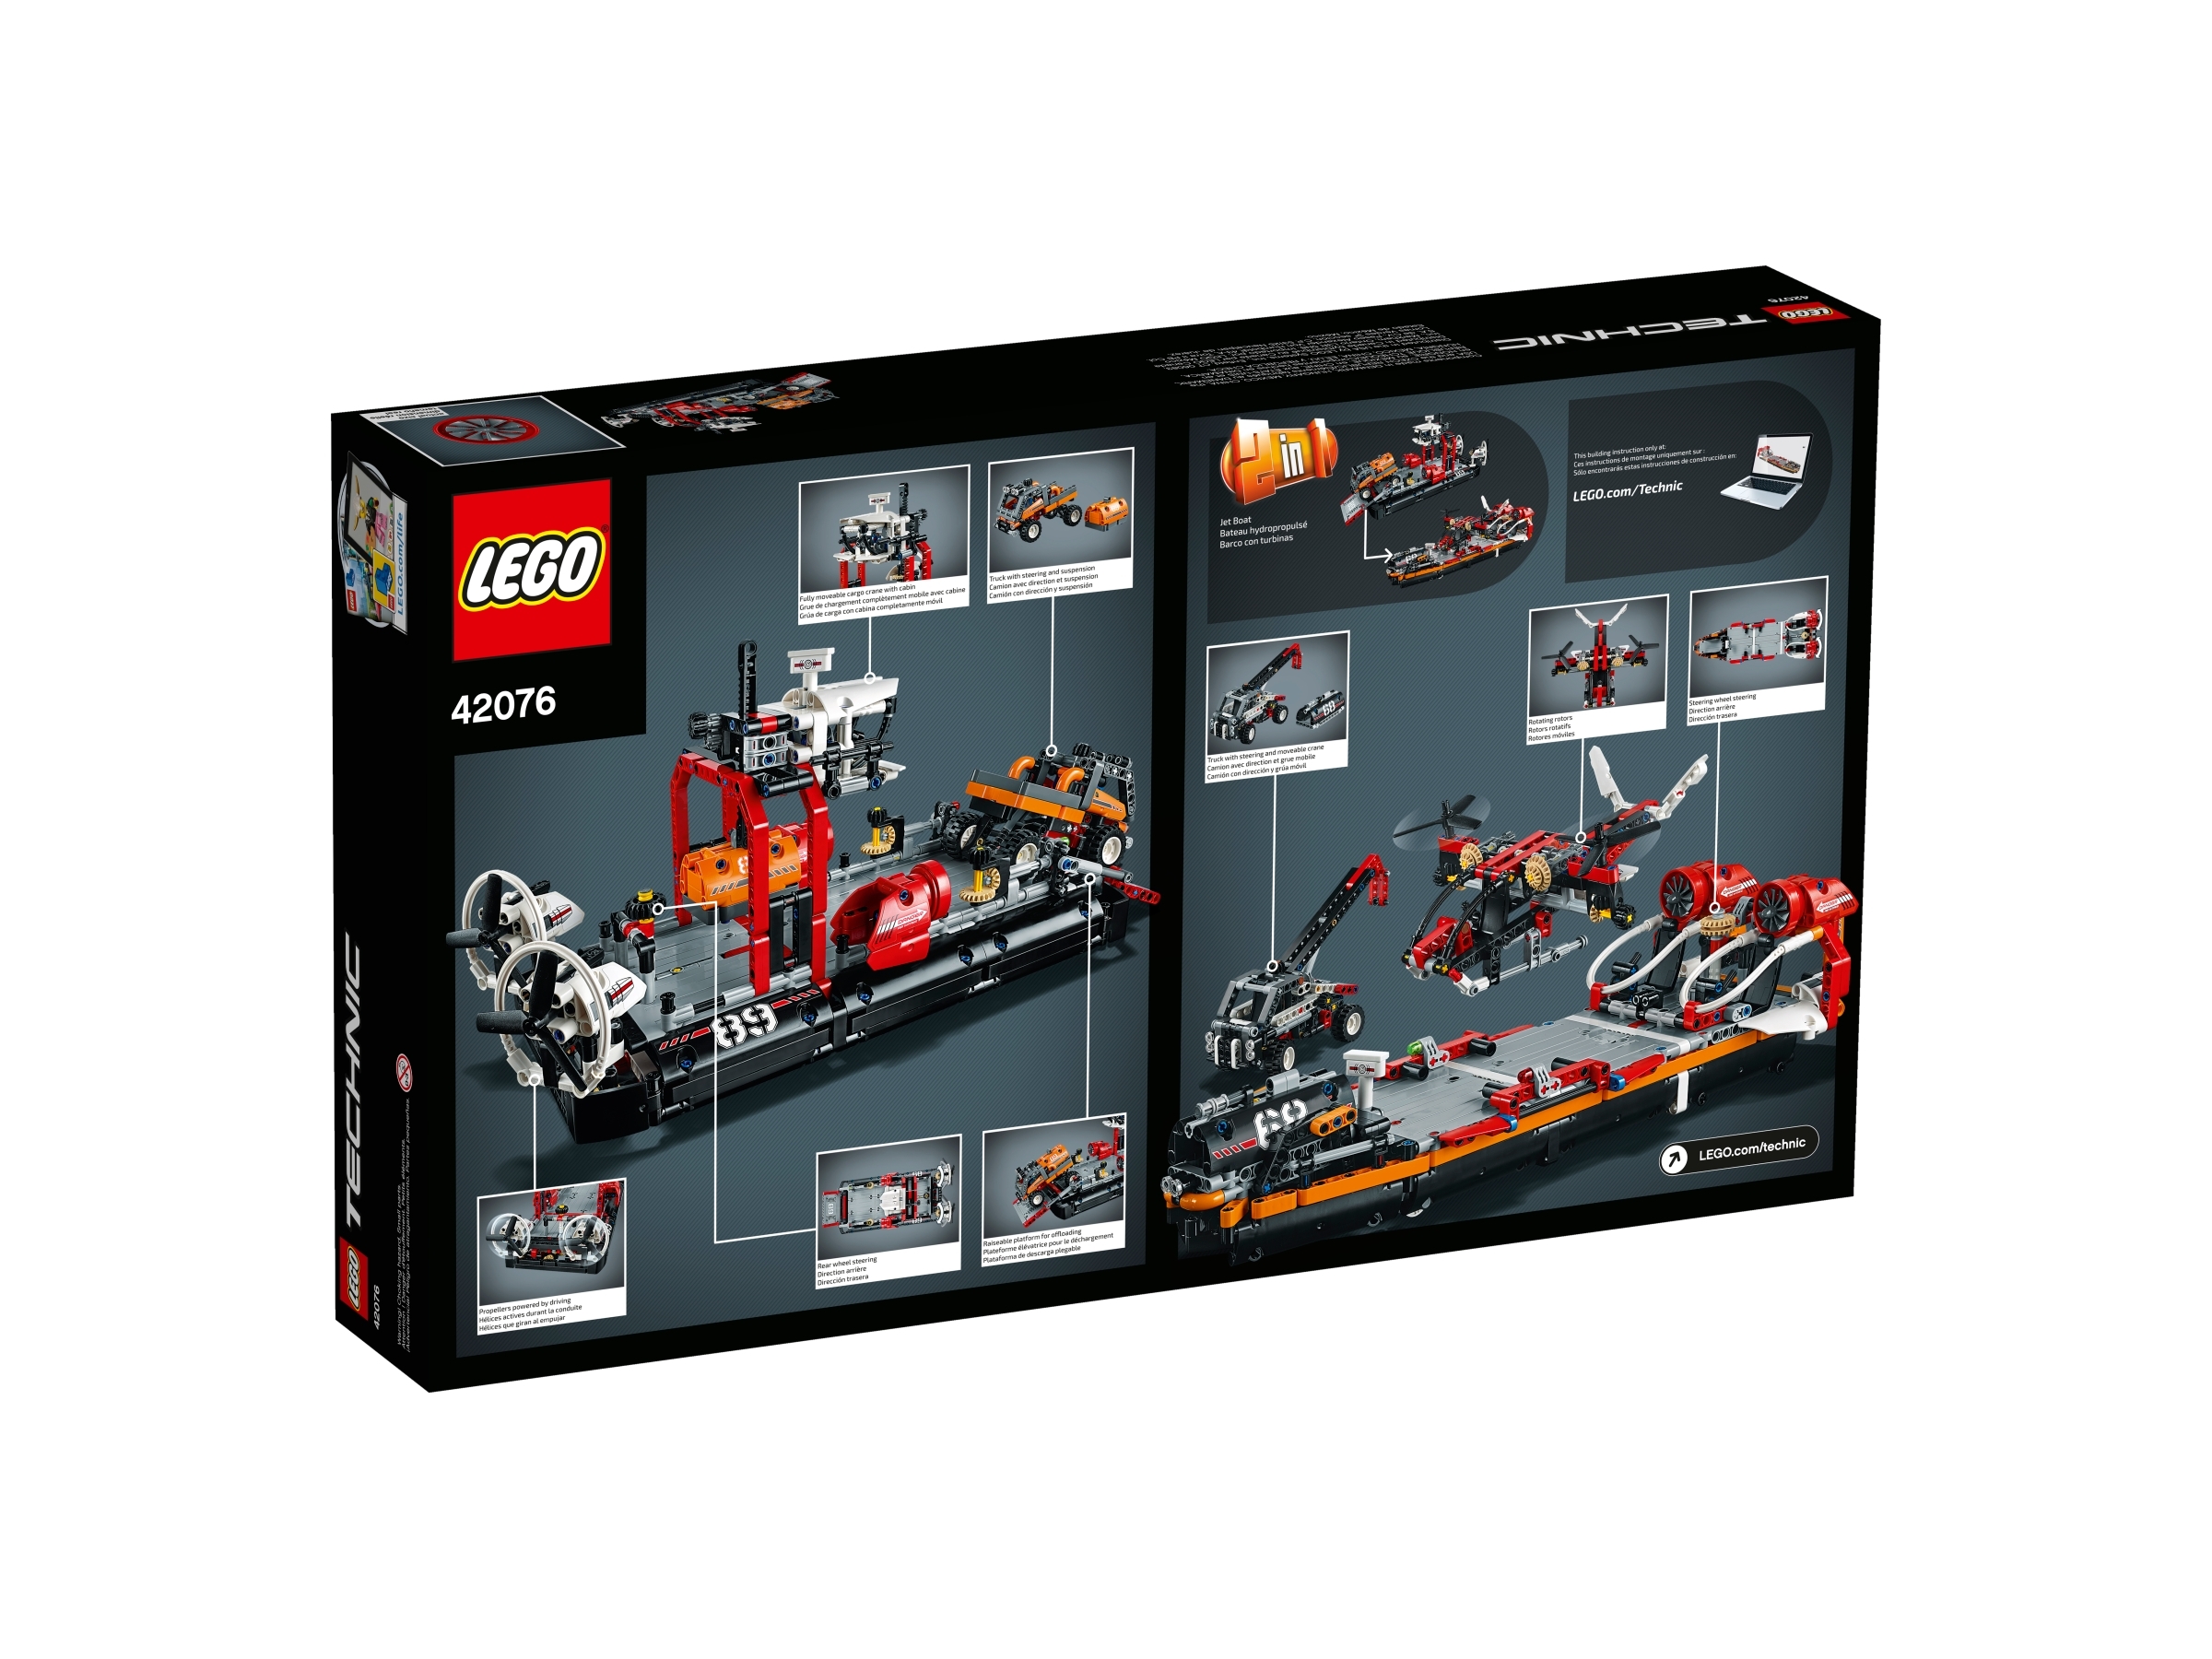 for sale online LEGO Technic Hovercraft 2013 42002